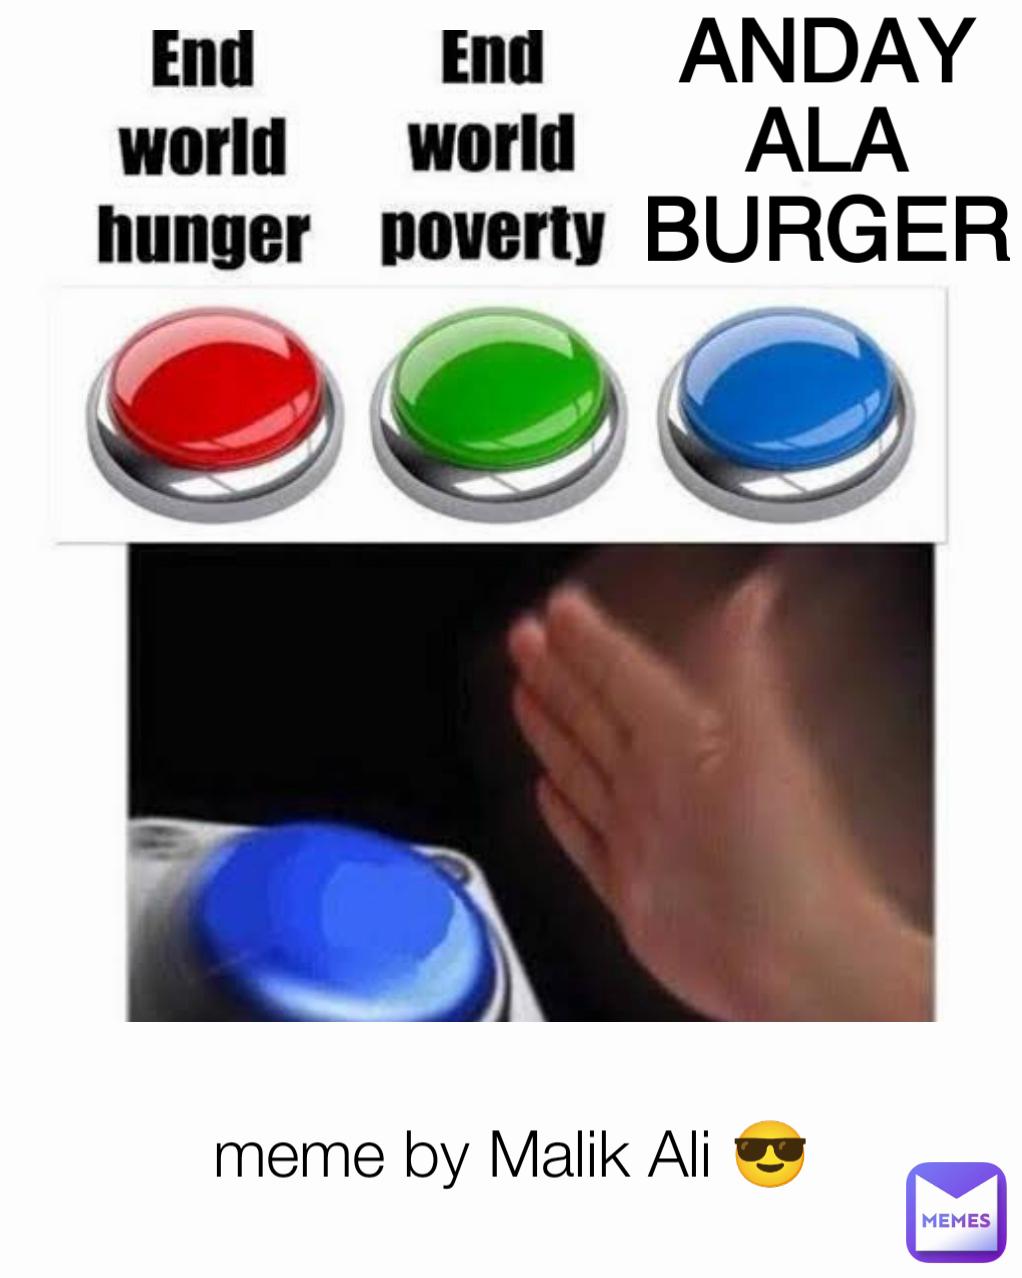 ANDAY ALA BURGER meme by Malik Ali 😎